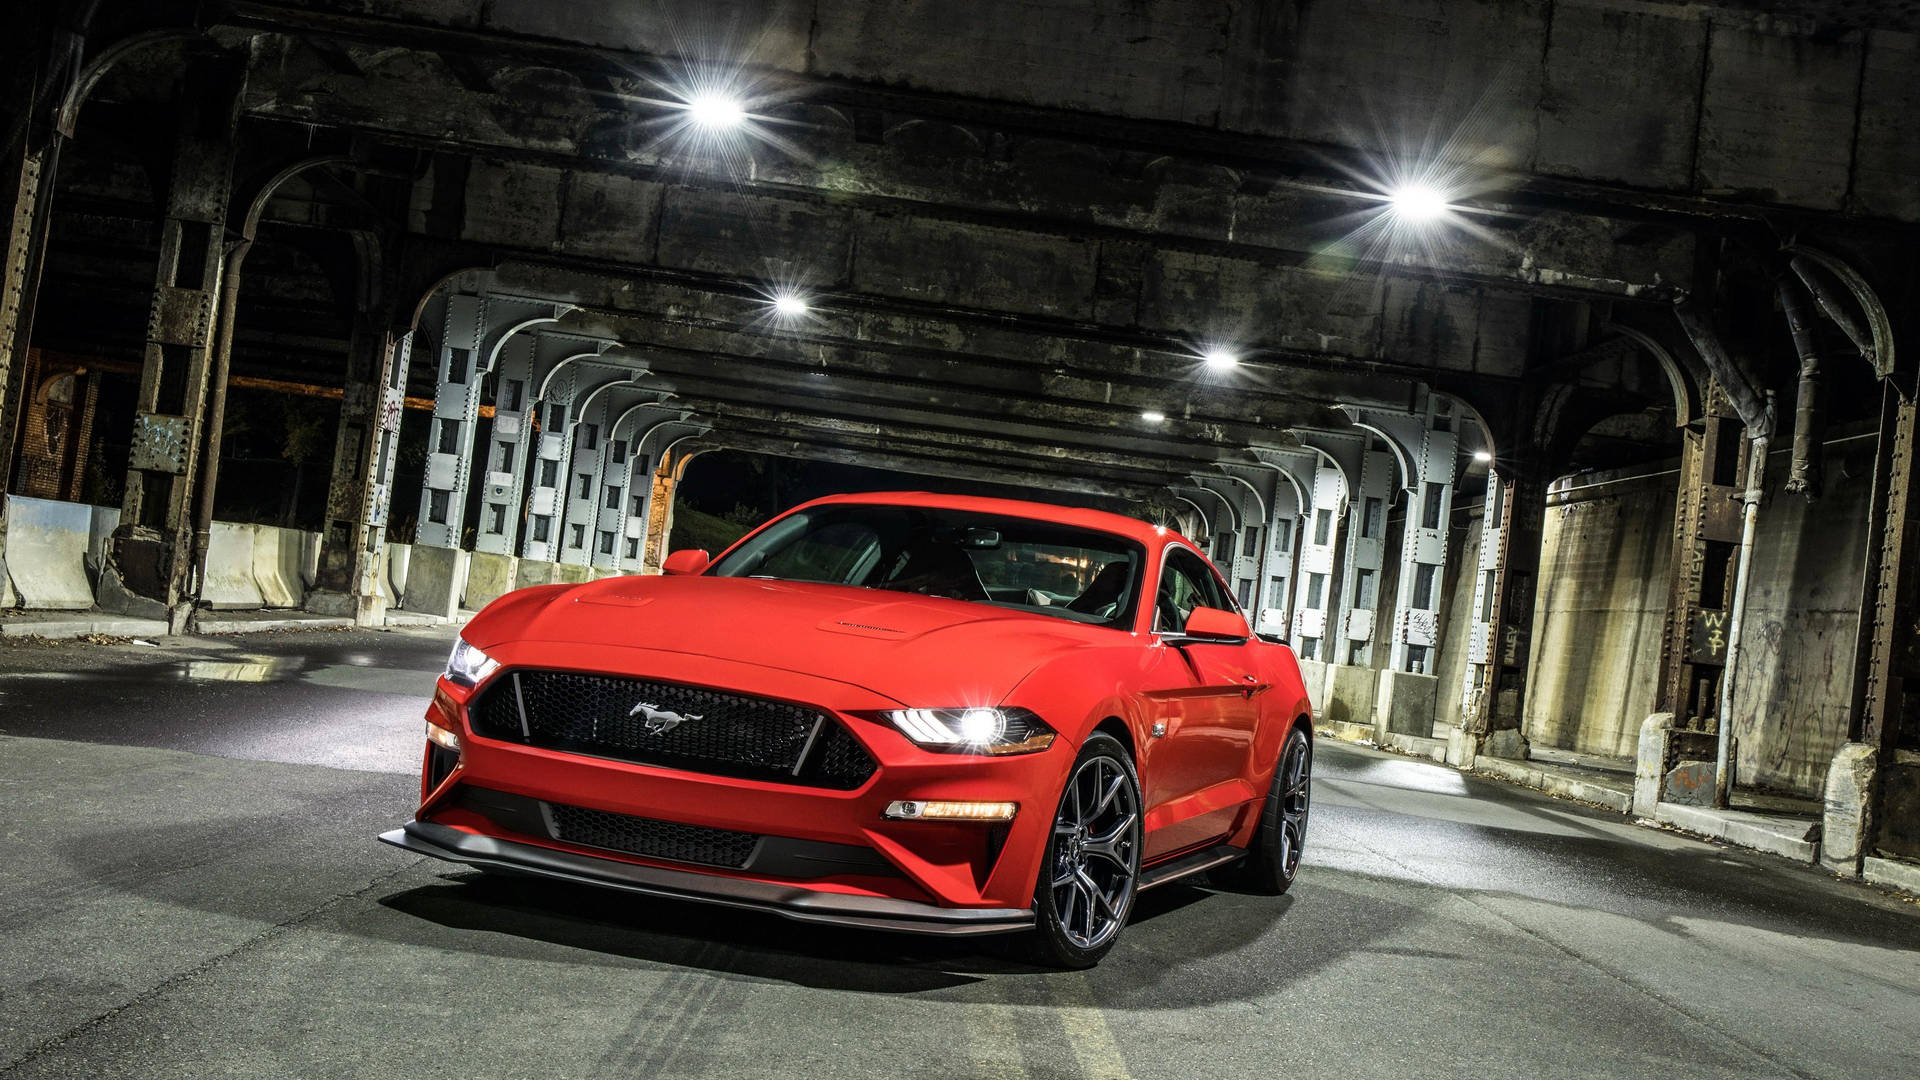 4k Ultra Hd Mustang Gt Red